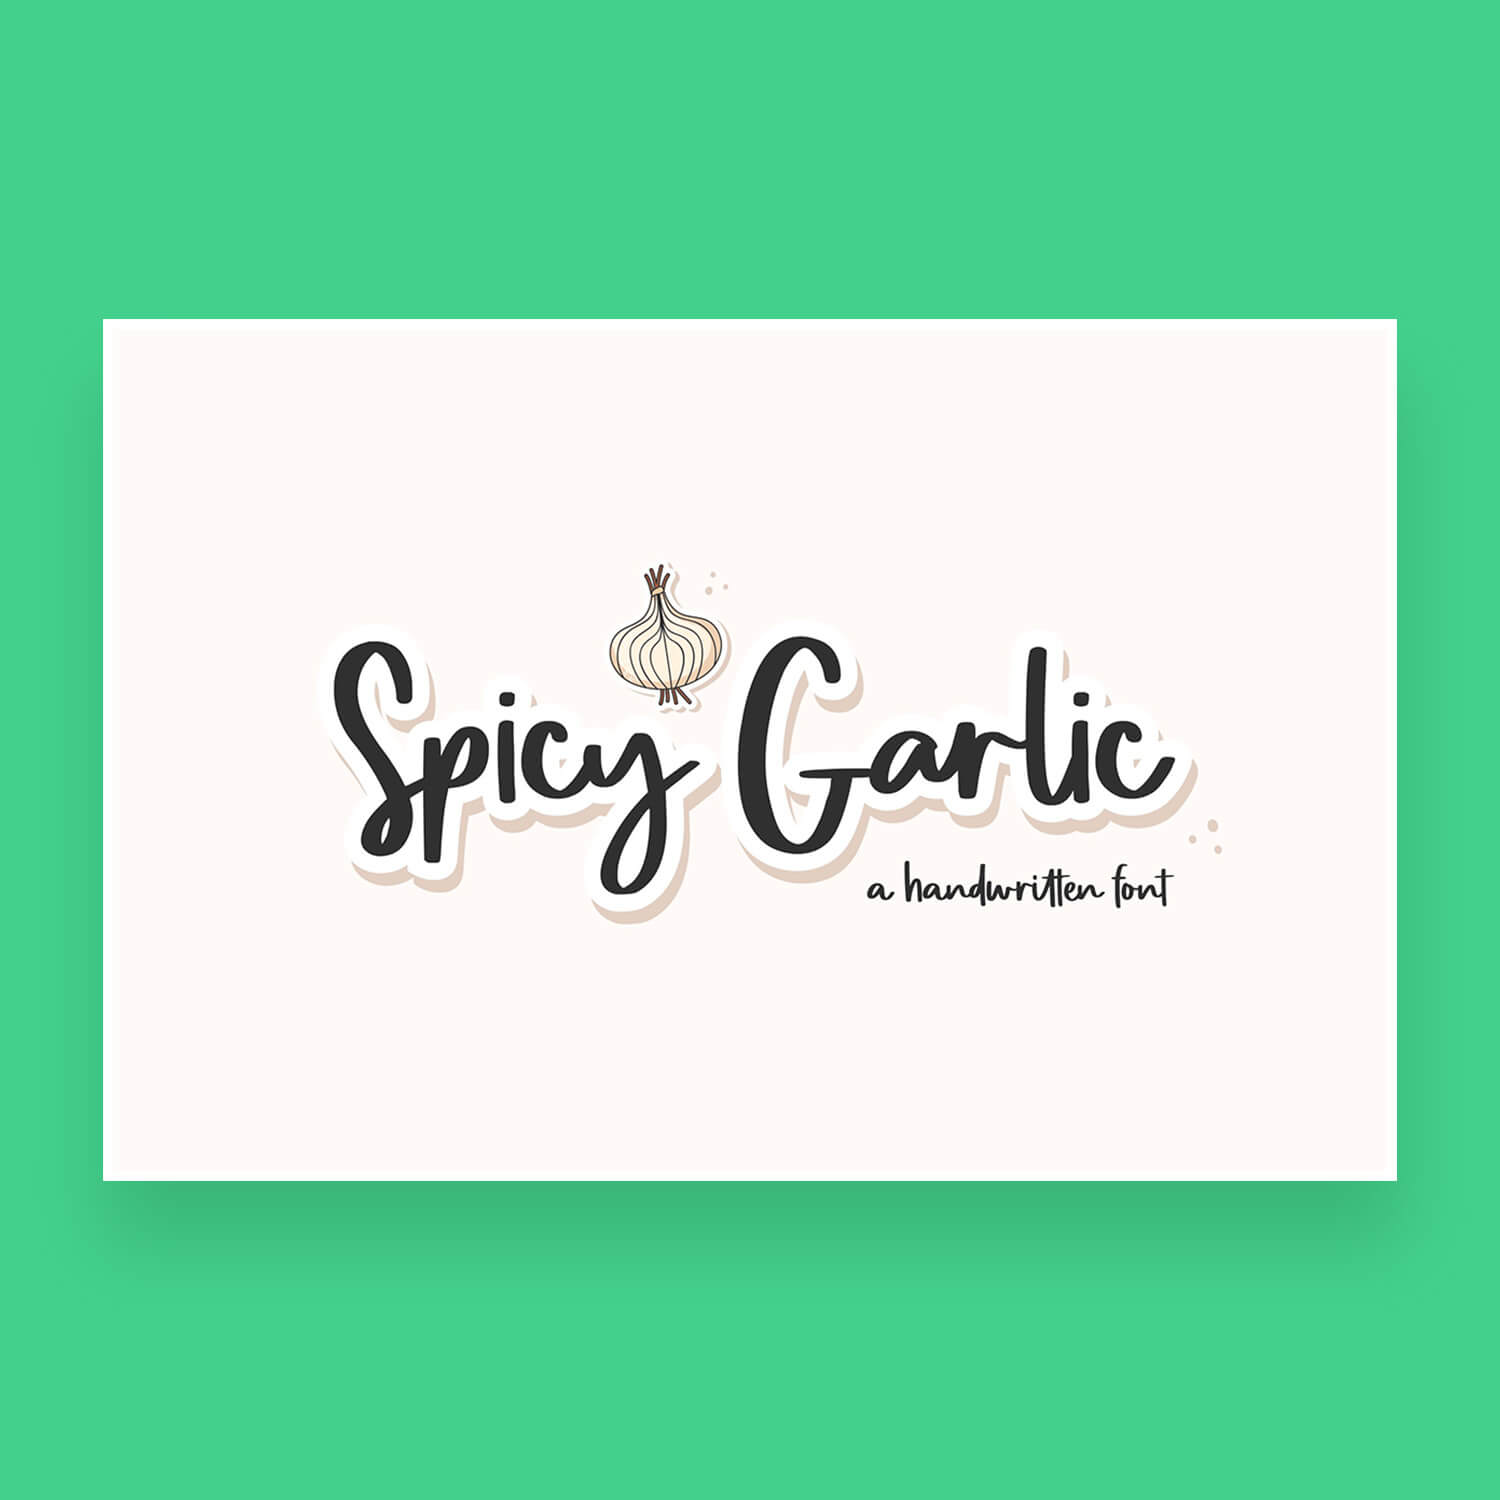 spicy garlic amazing handwritten font cover image.